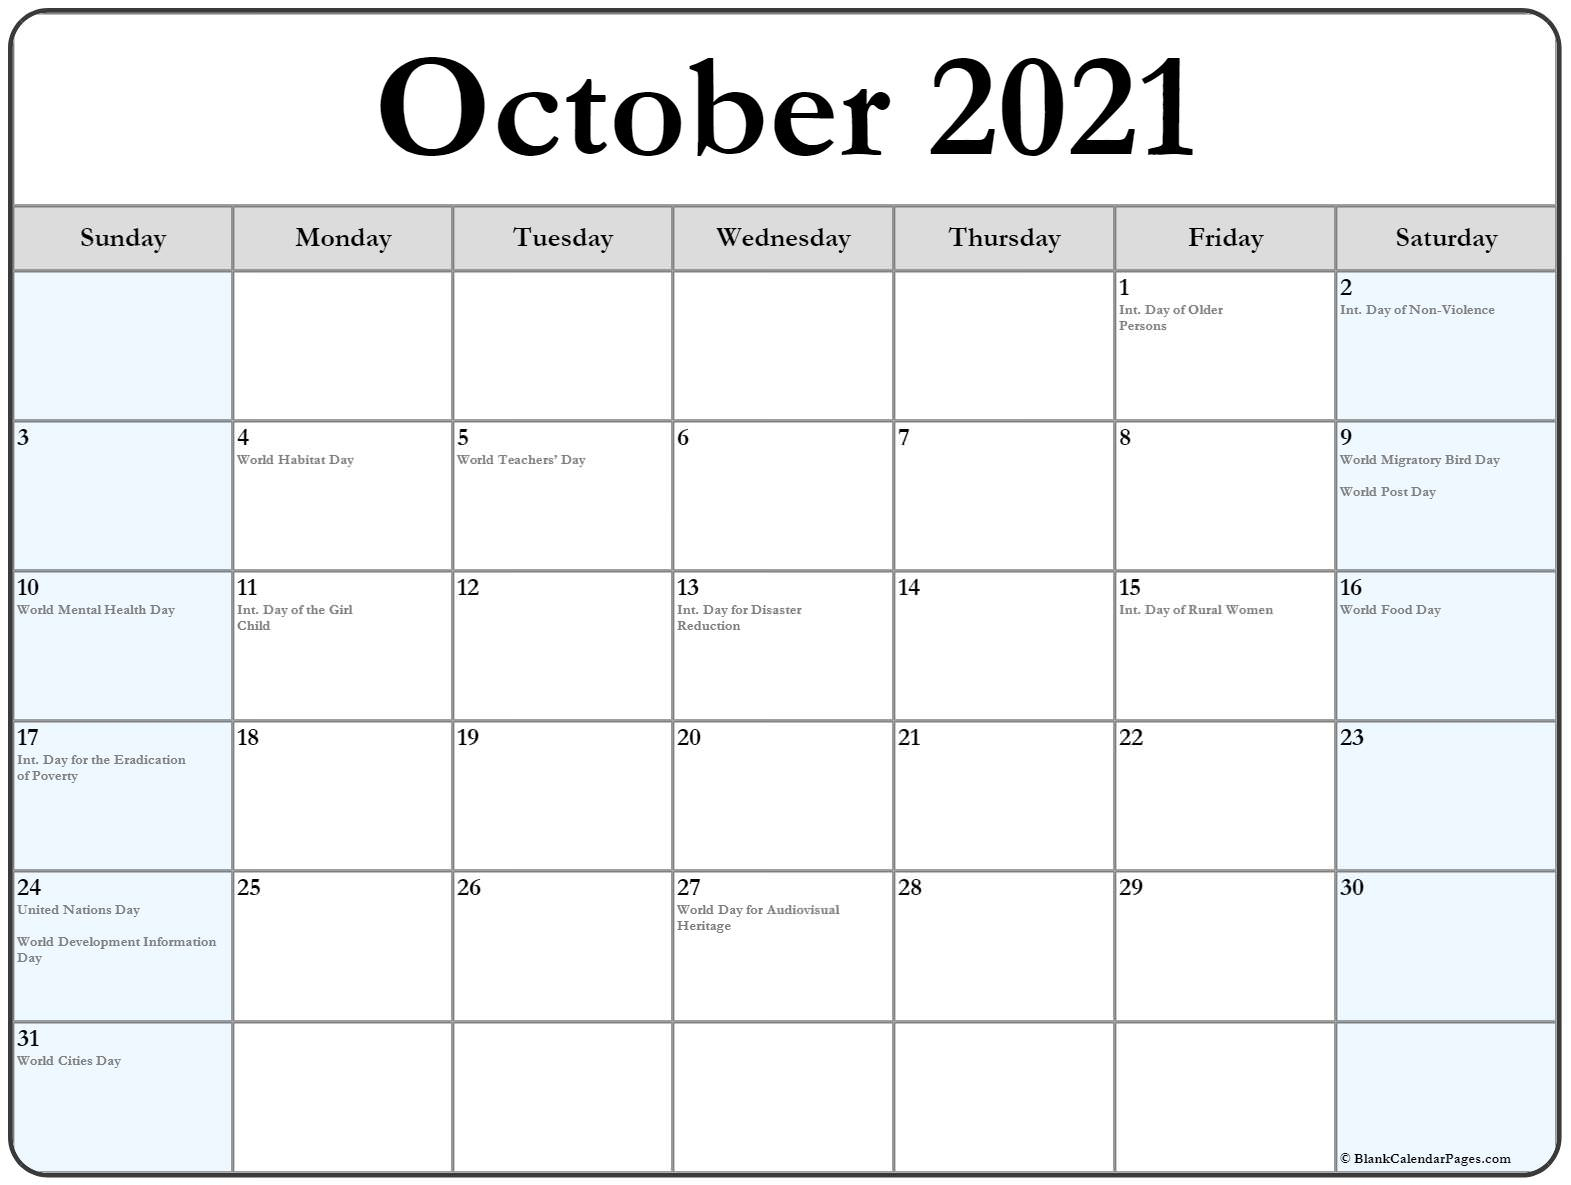 October 2021 Calendar With Holidays - Calendar Template 2021 December To February Calendar 2021